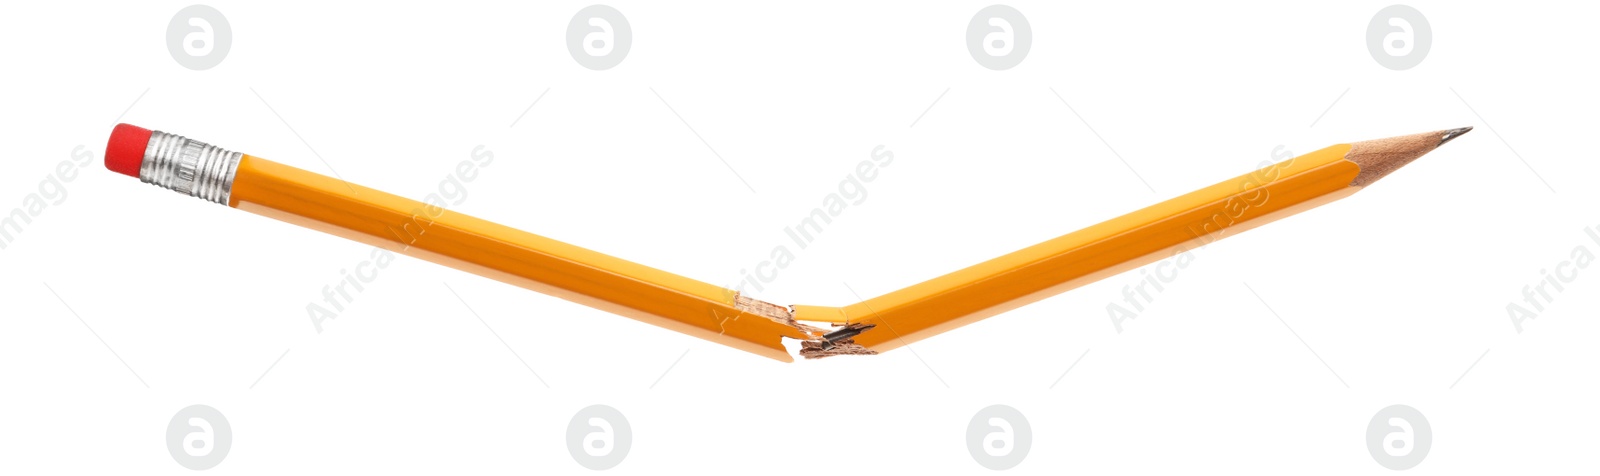 Photo of Broken graphite pencil on white background. School stationery